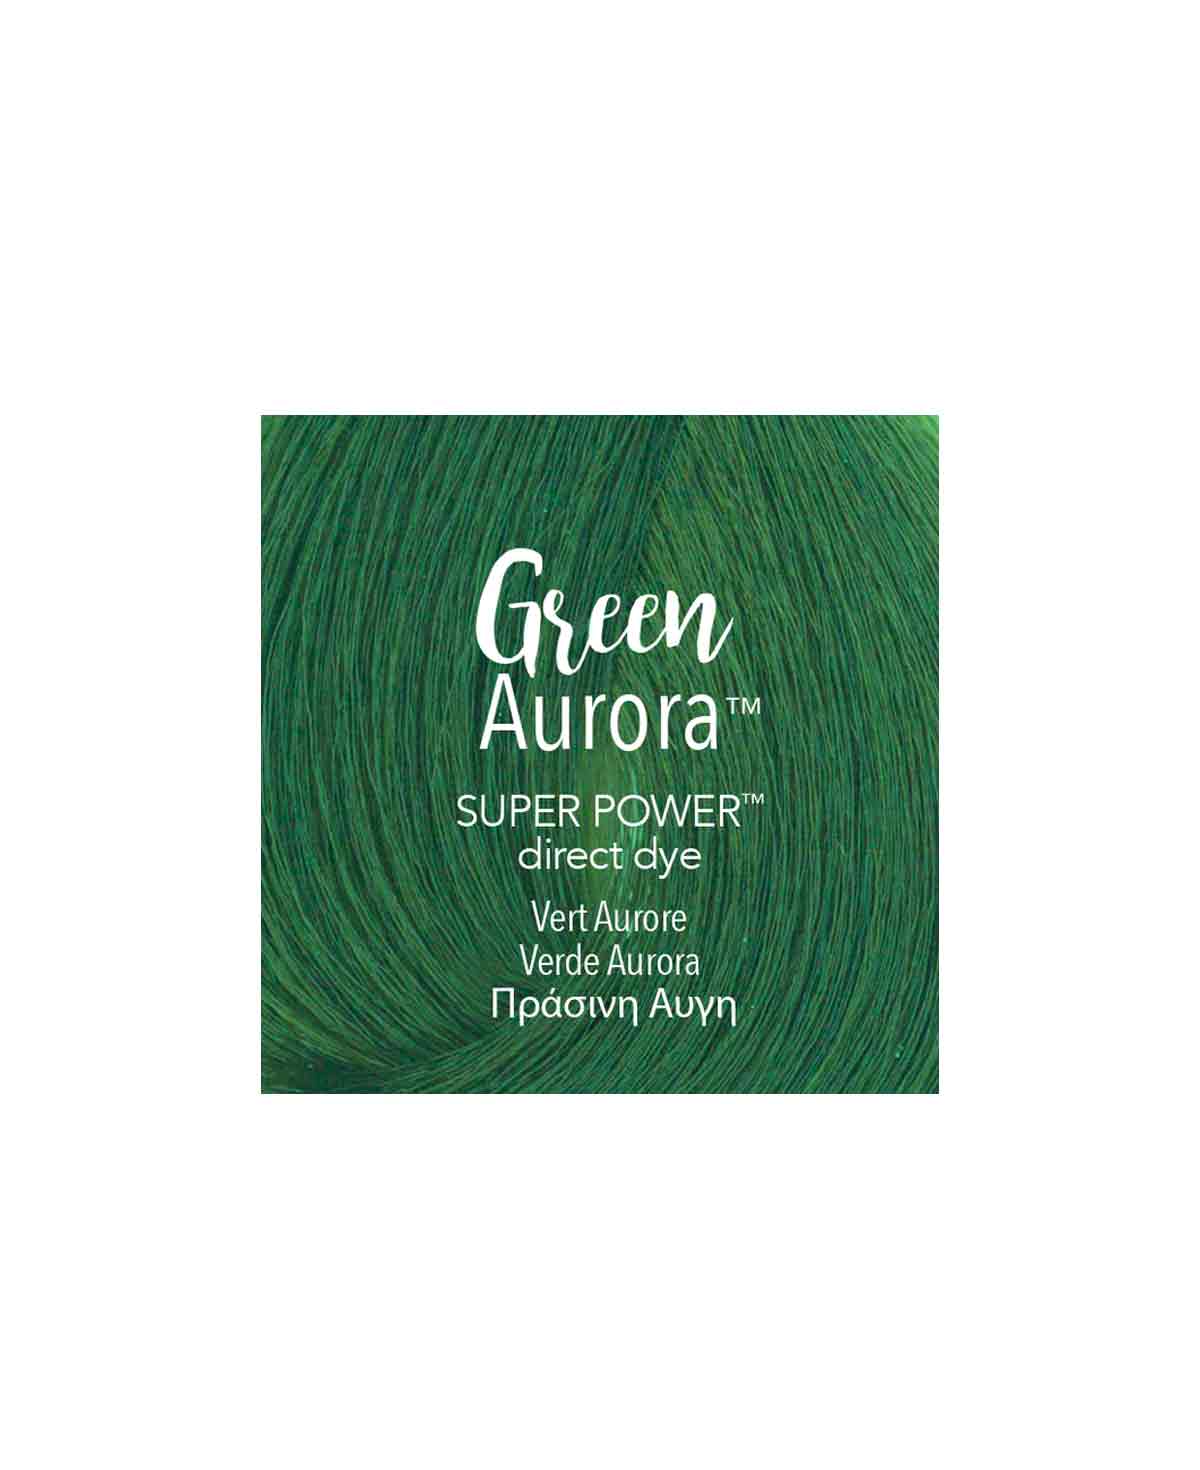 Mydentity - Green Aurora